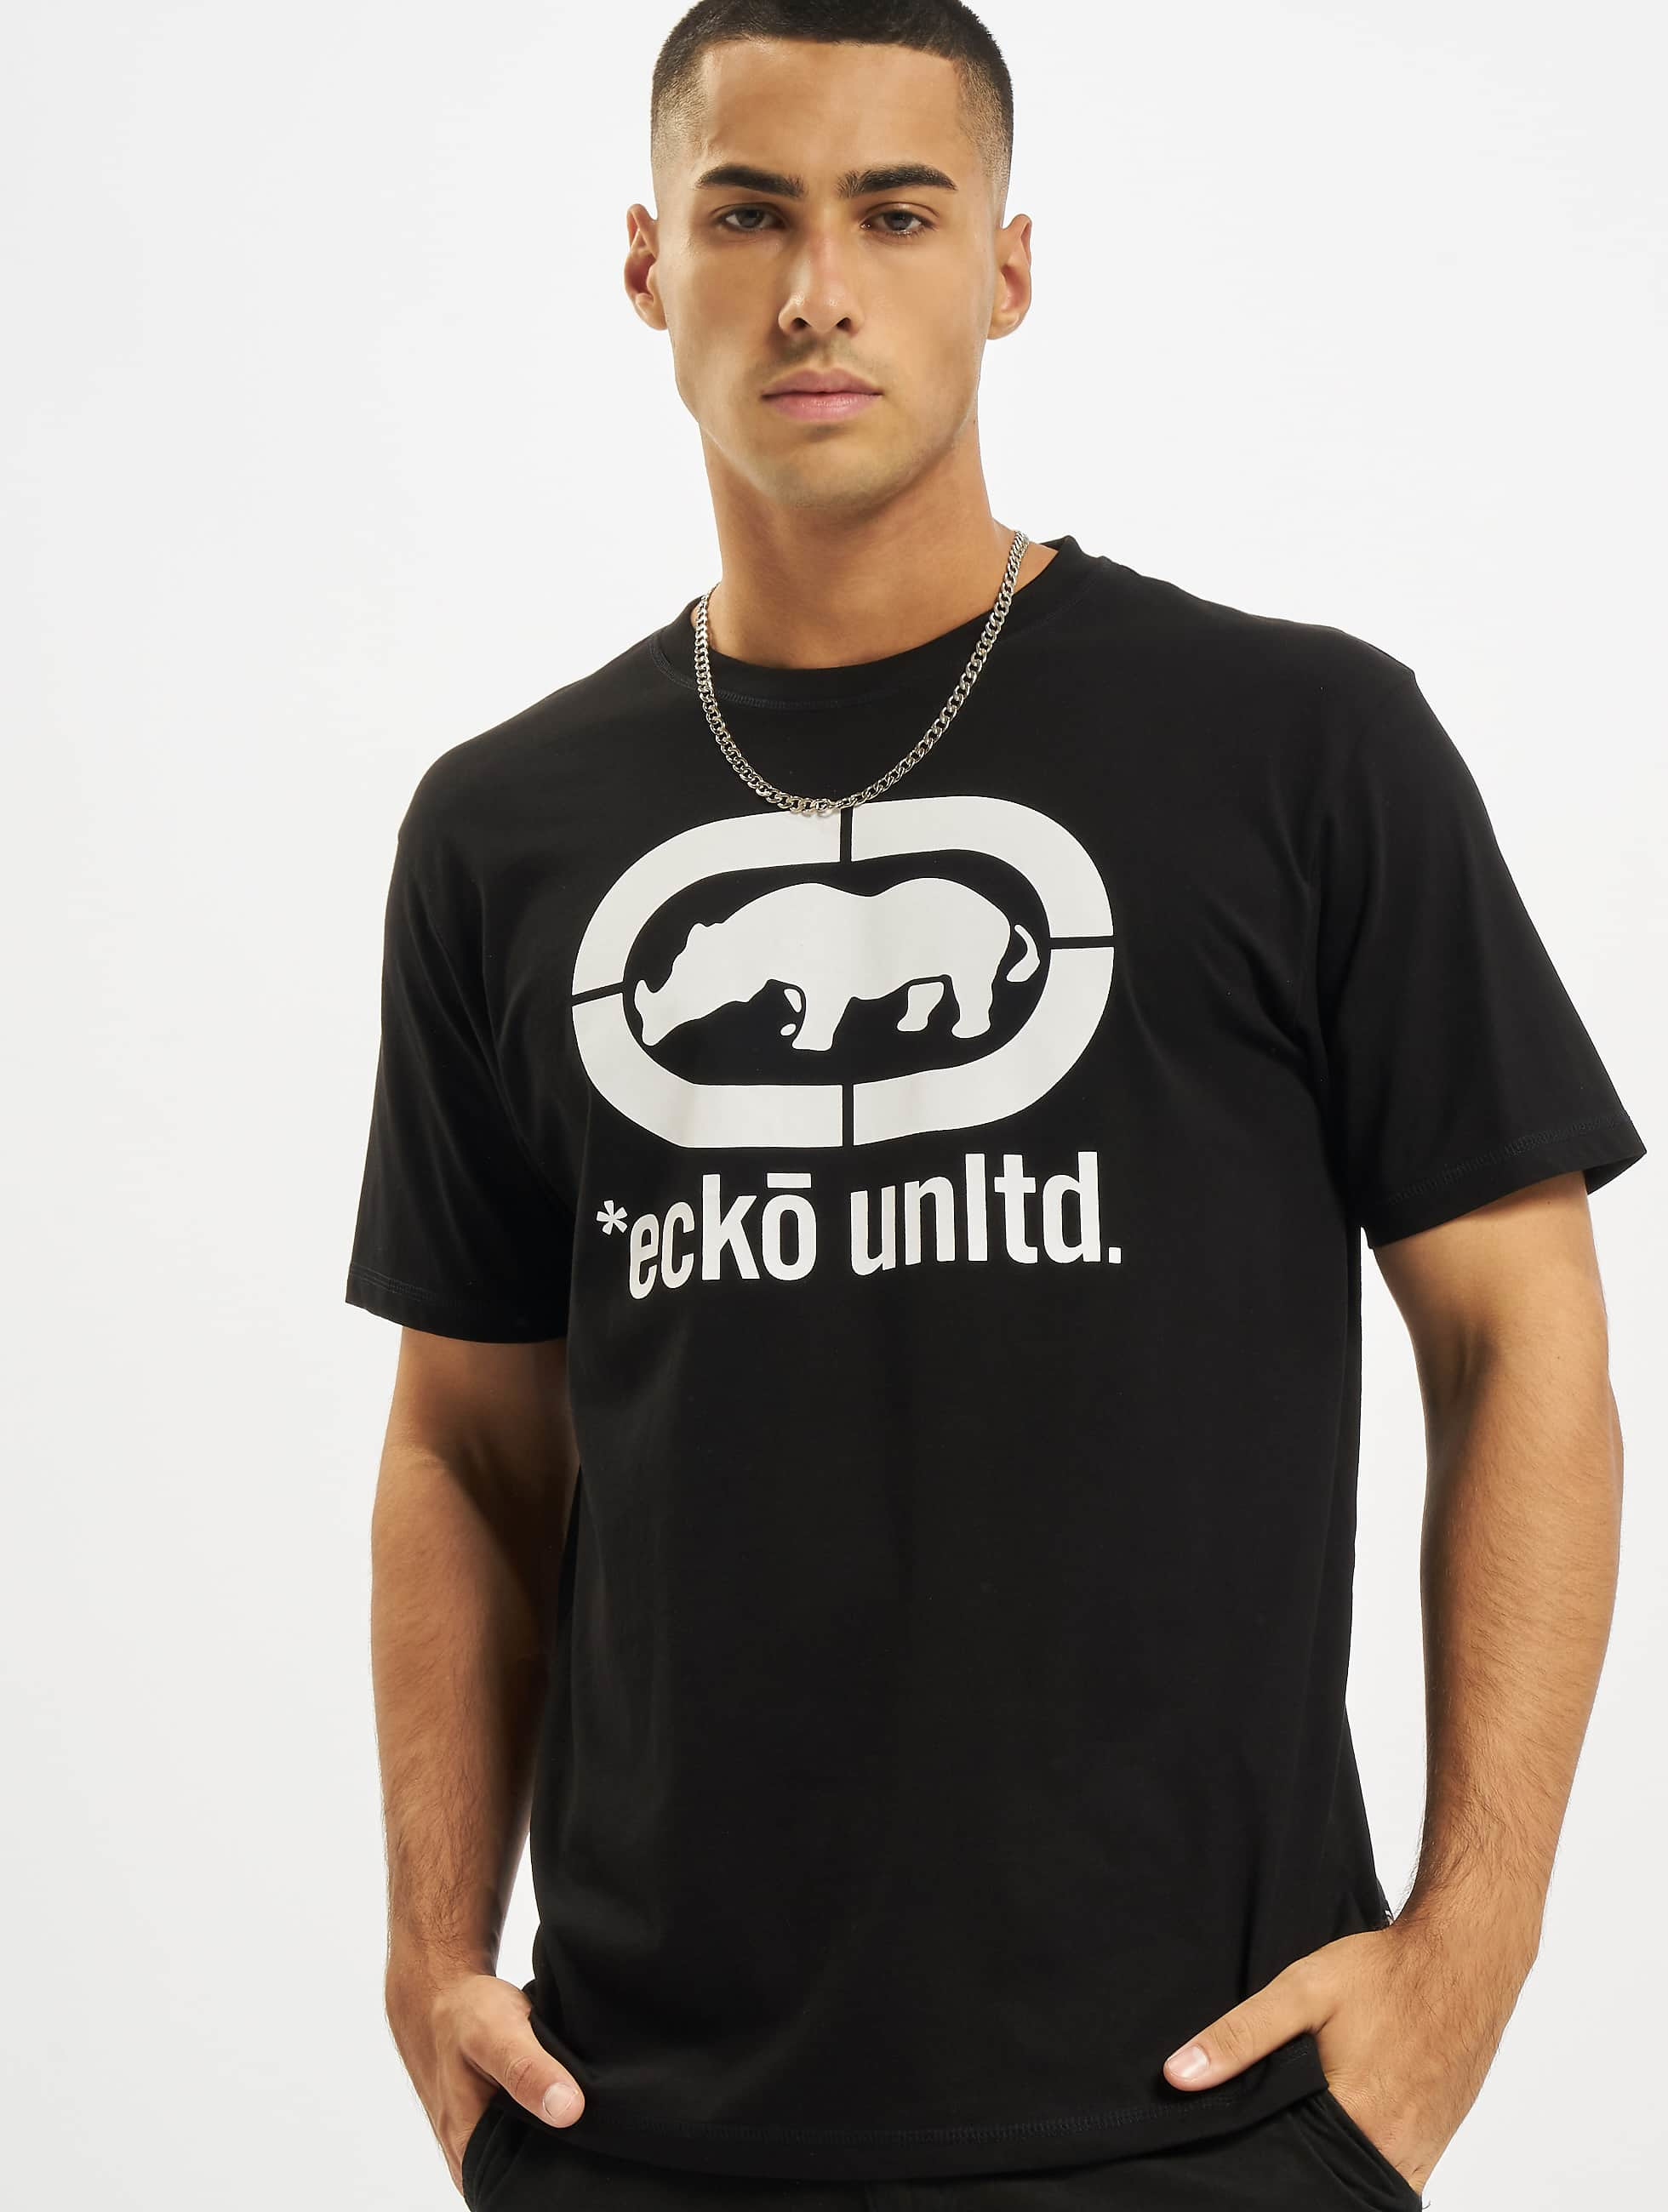 Ecko Unltd. John Rhino noir T-Shirt homme